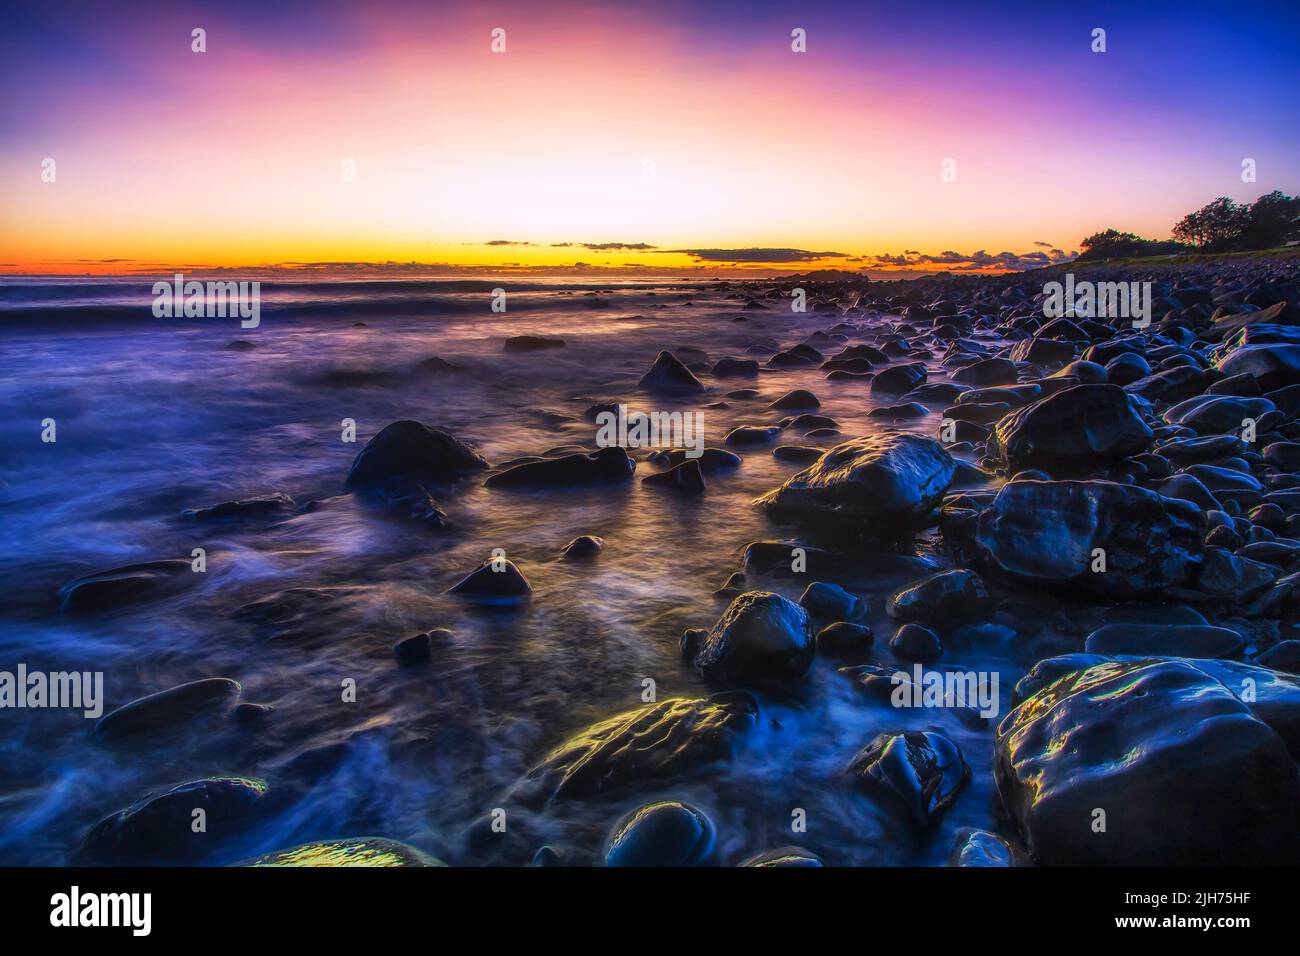 Pebbles on Pebbly beach of Forster town in Australia on Pacific coast - dark scenic seascape sunrise. Stock Photo